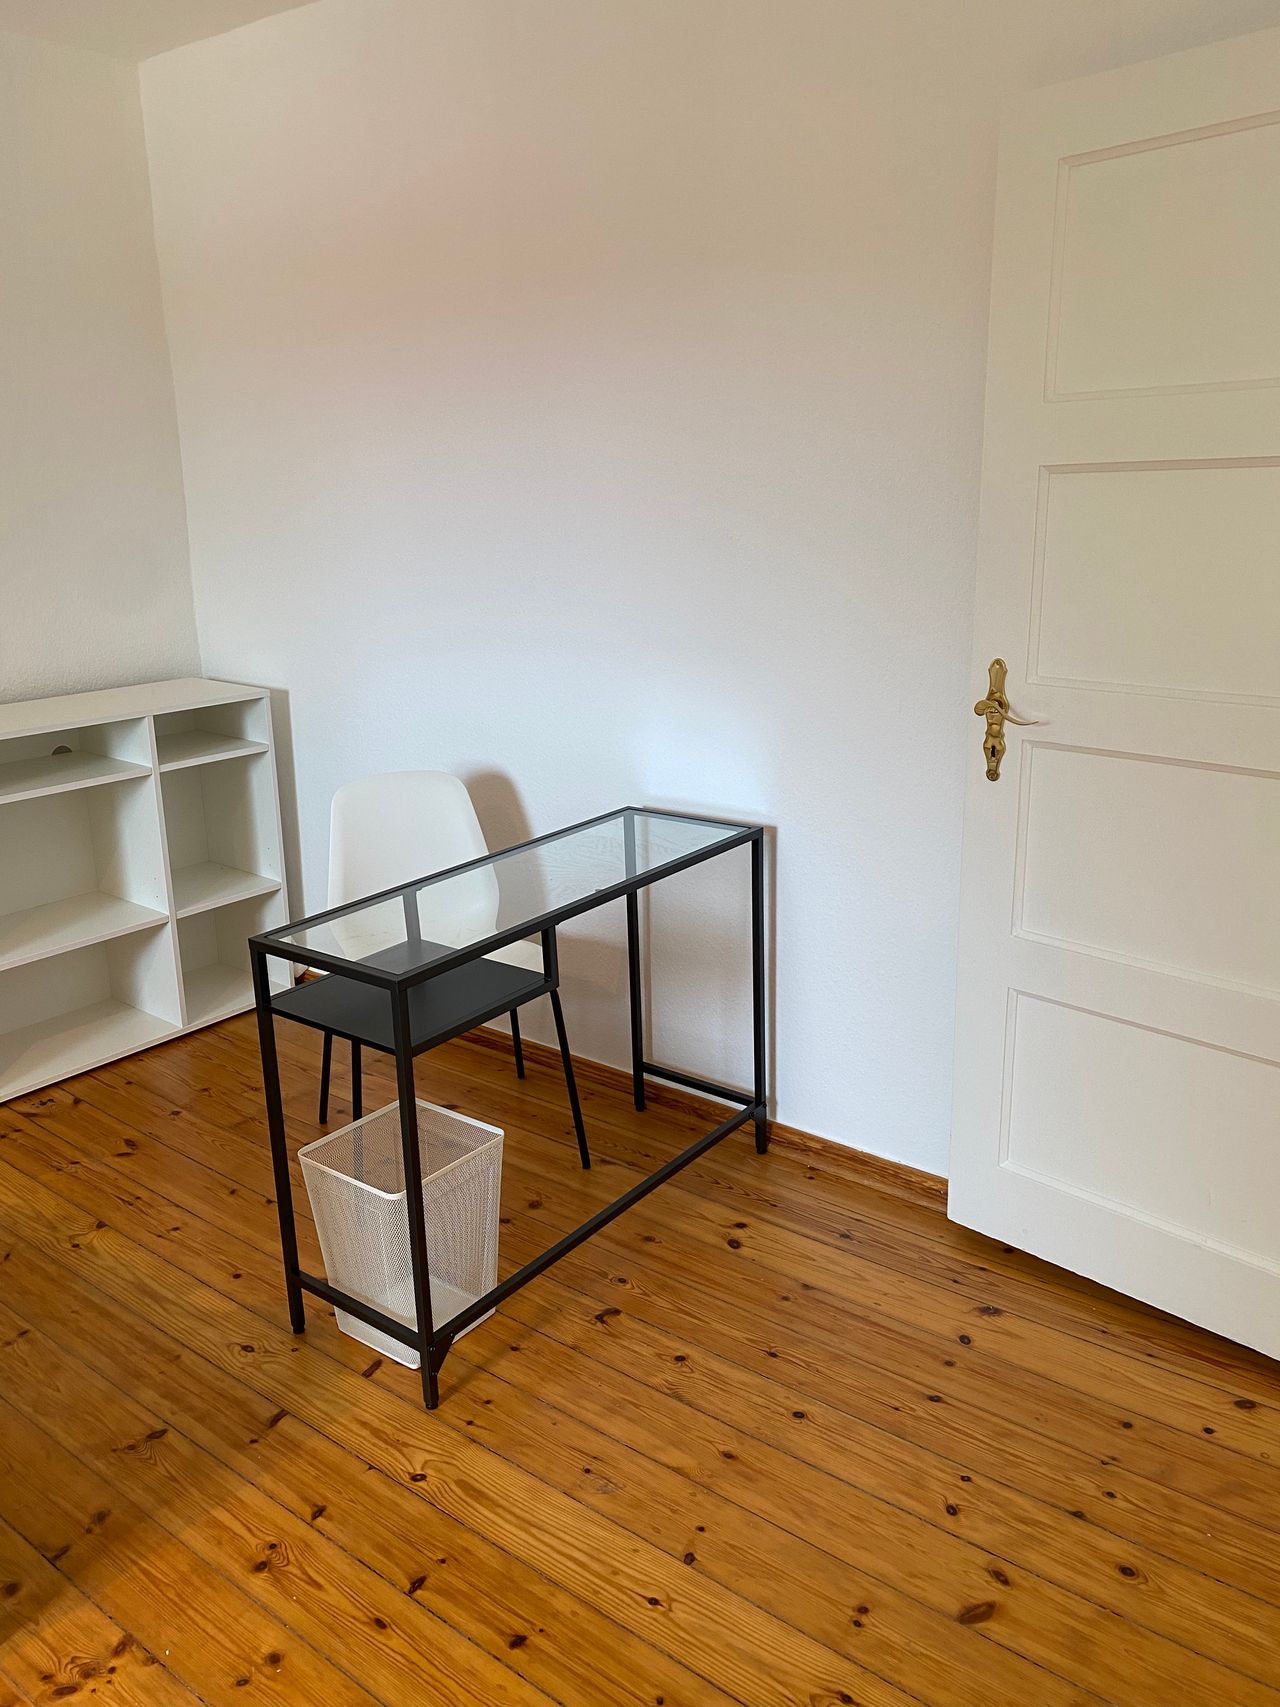 Brand new furnished 3-bedroom apartment in Kaulsdorf